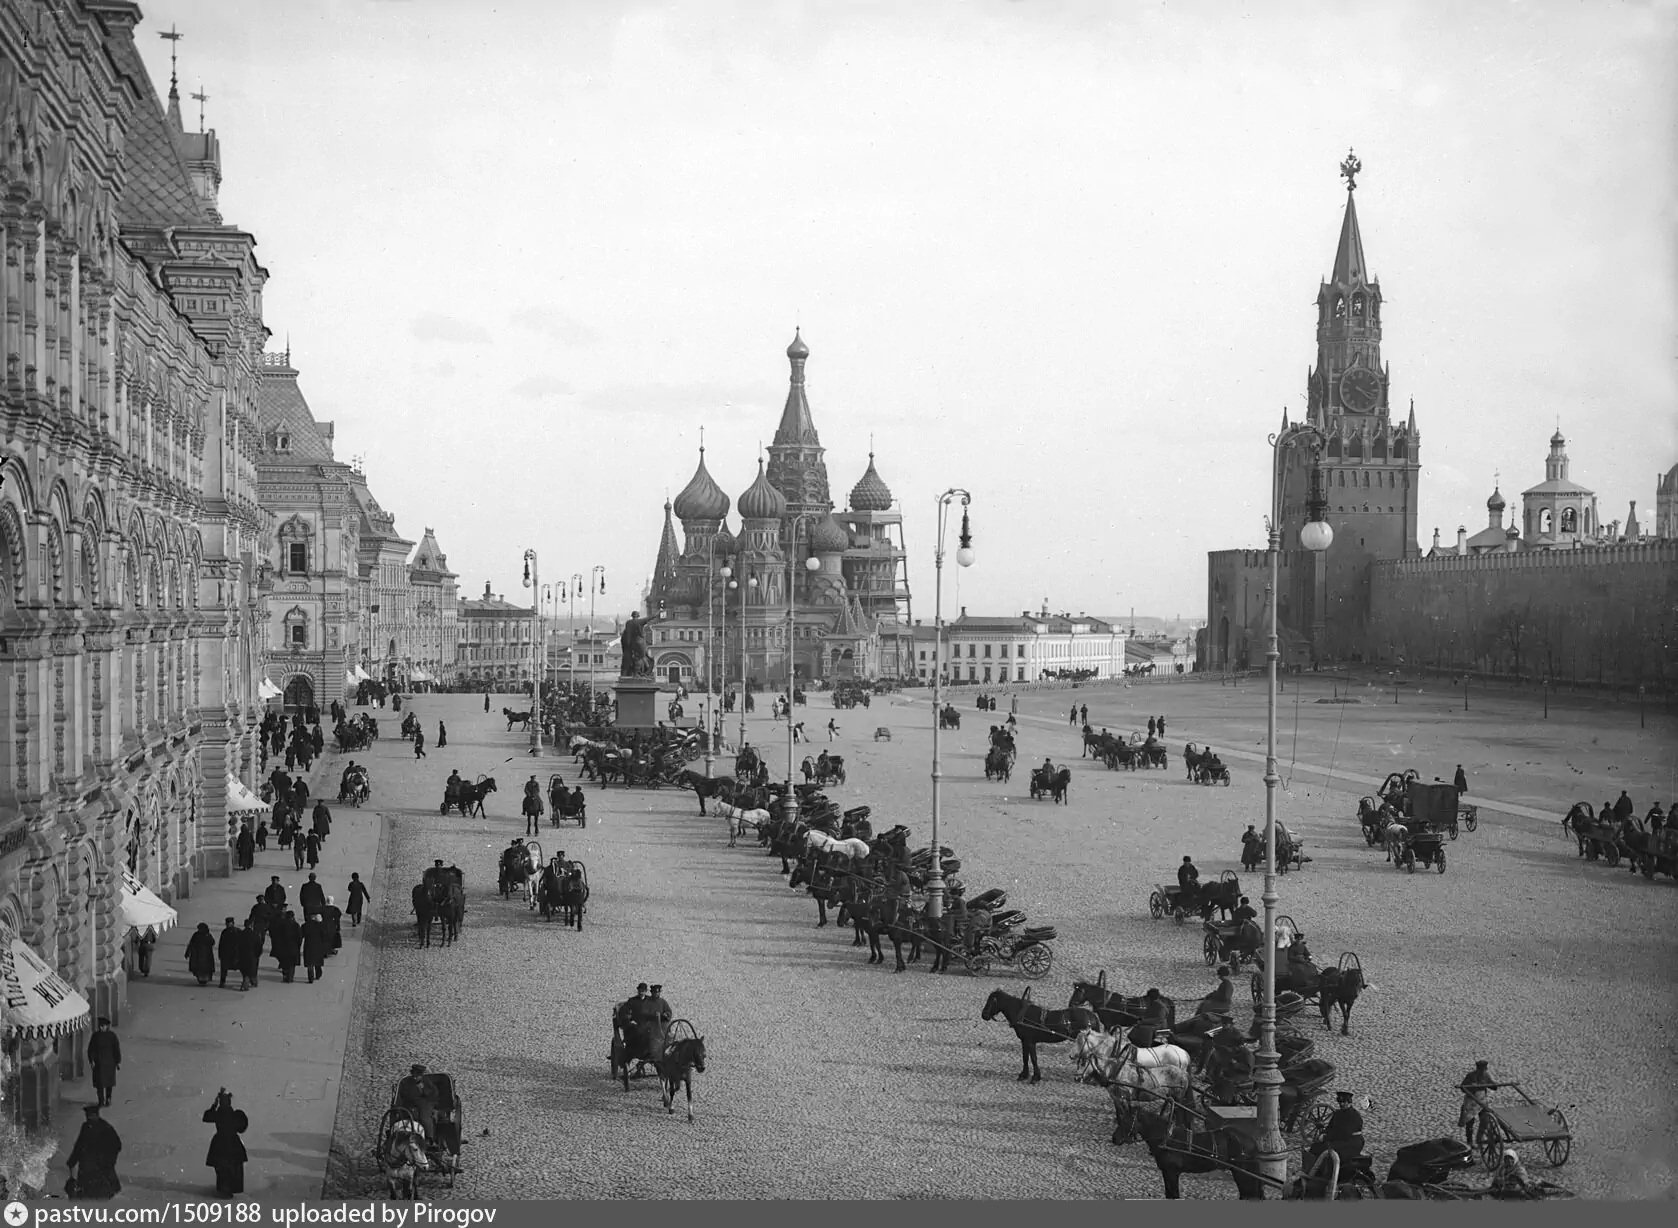 Россия с 9 20 века. Москва 19-20 века. Москва Кремль 1890. Москва конец 19 века. Москва 20 век начало.